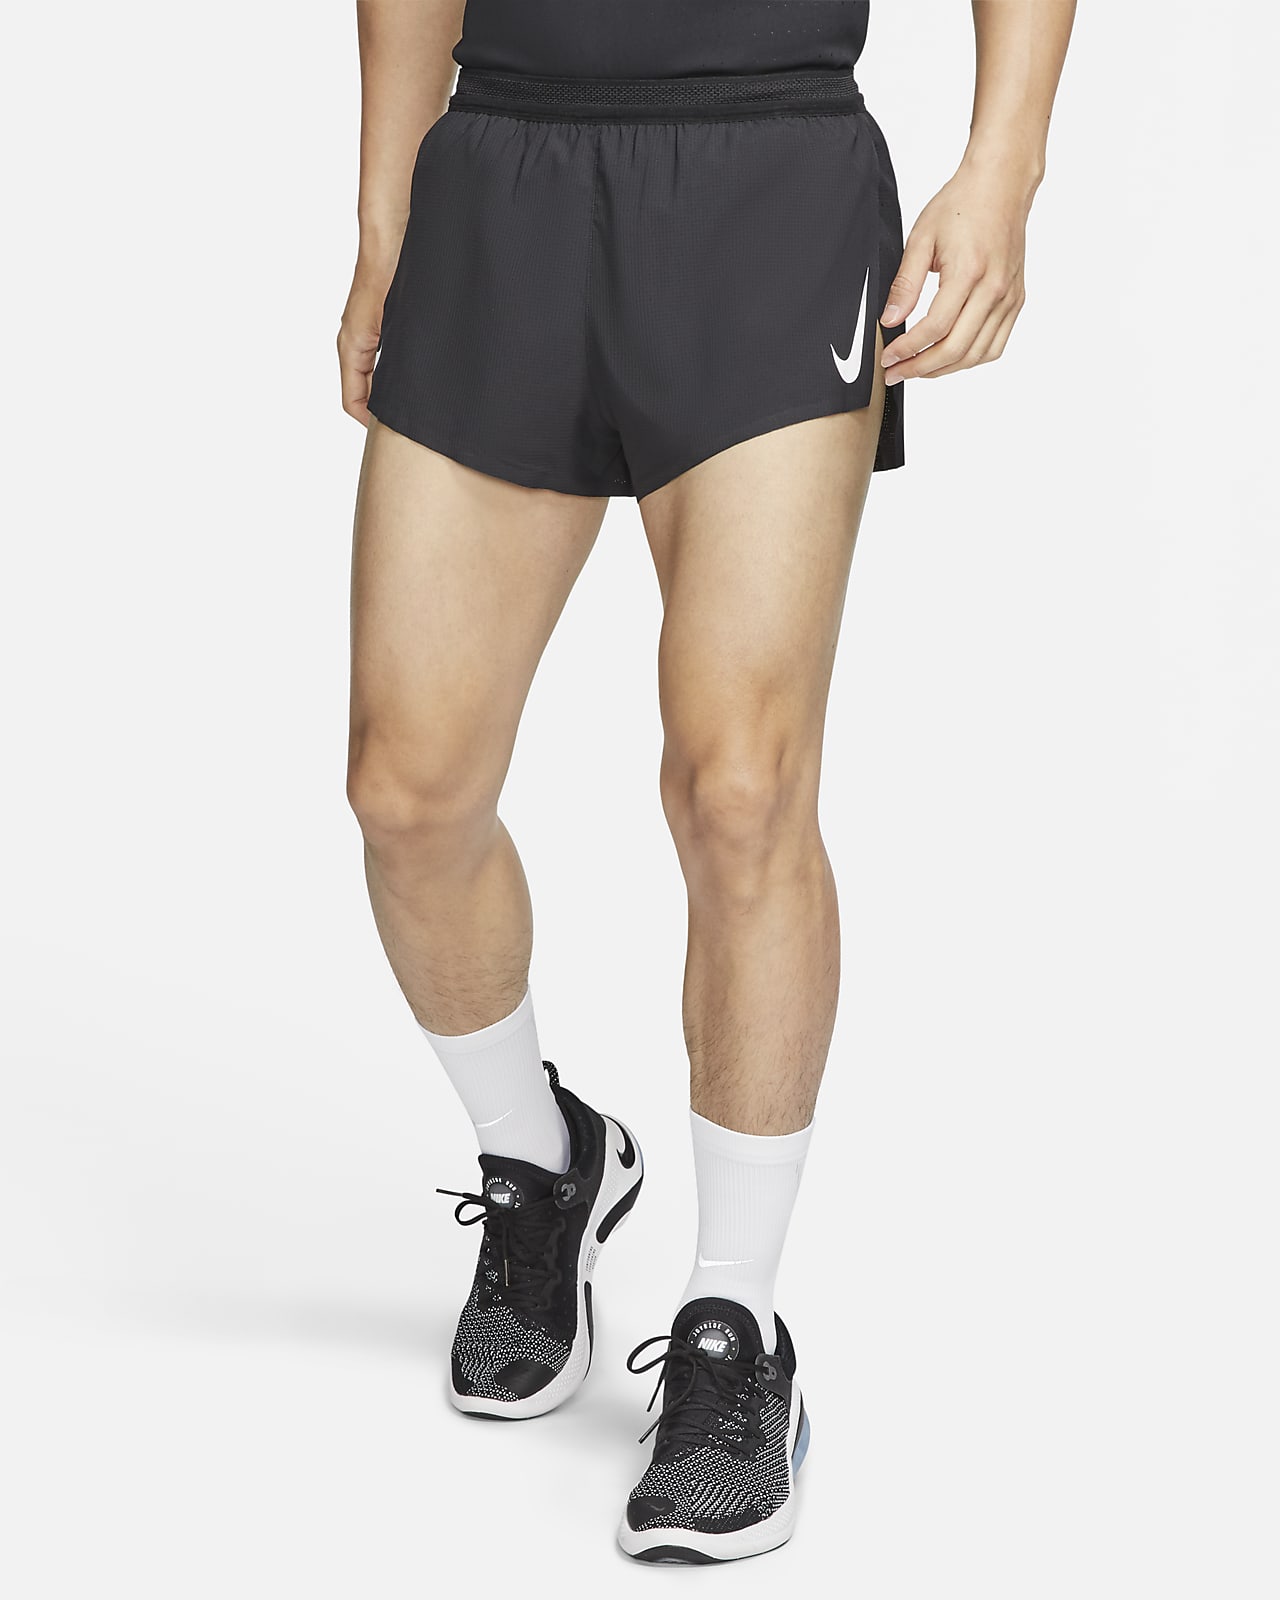 Inspect component Restrict Nike AeroSwift Men's 2" Running Shorts. Nike JP